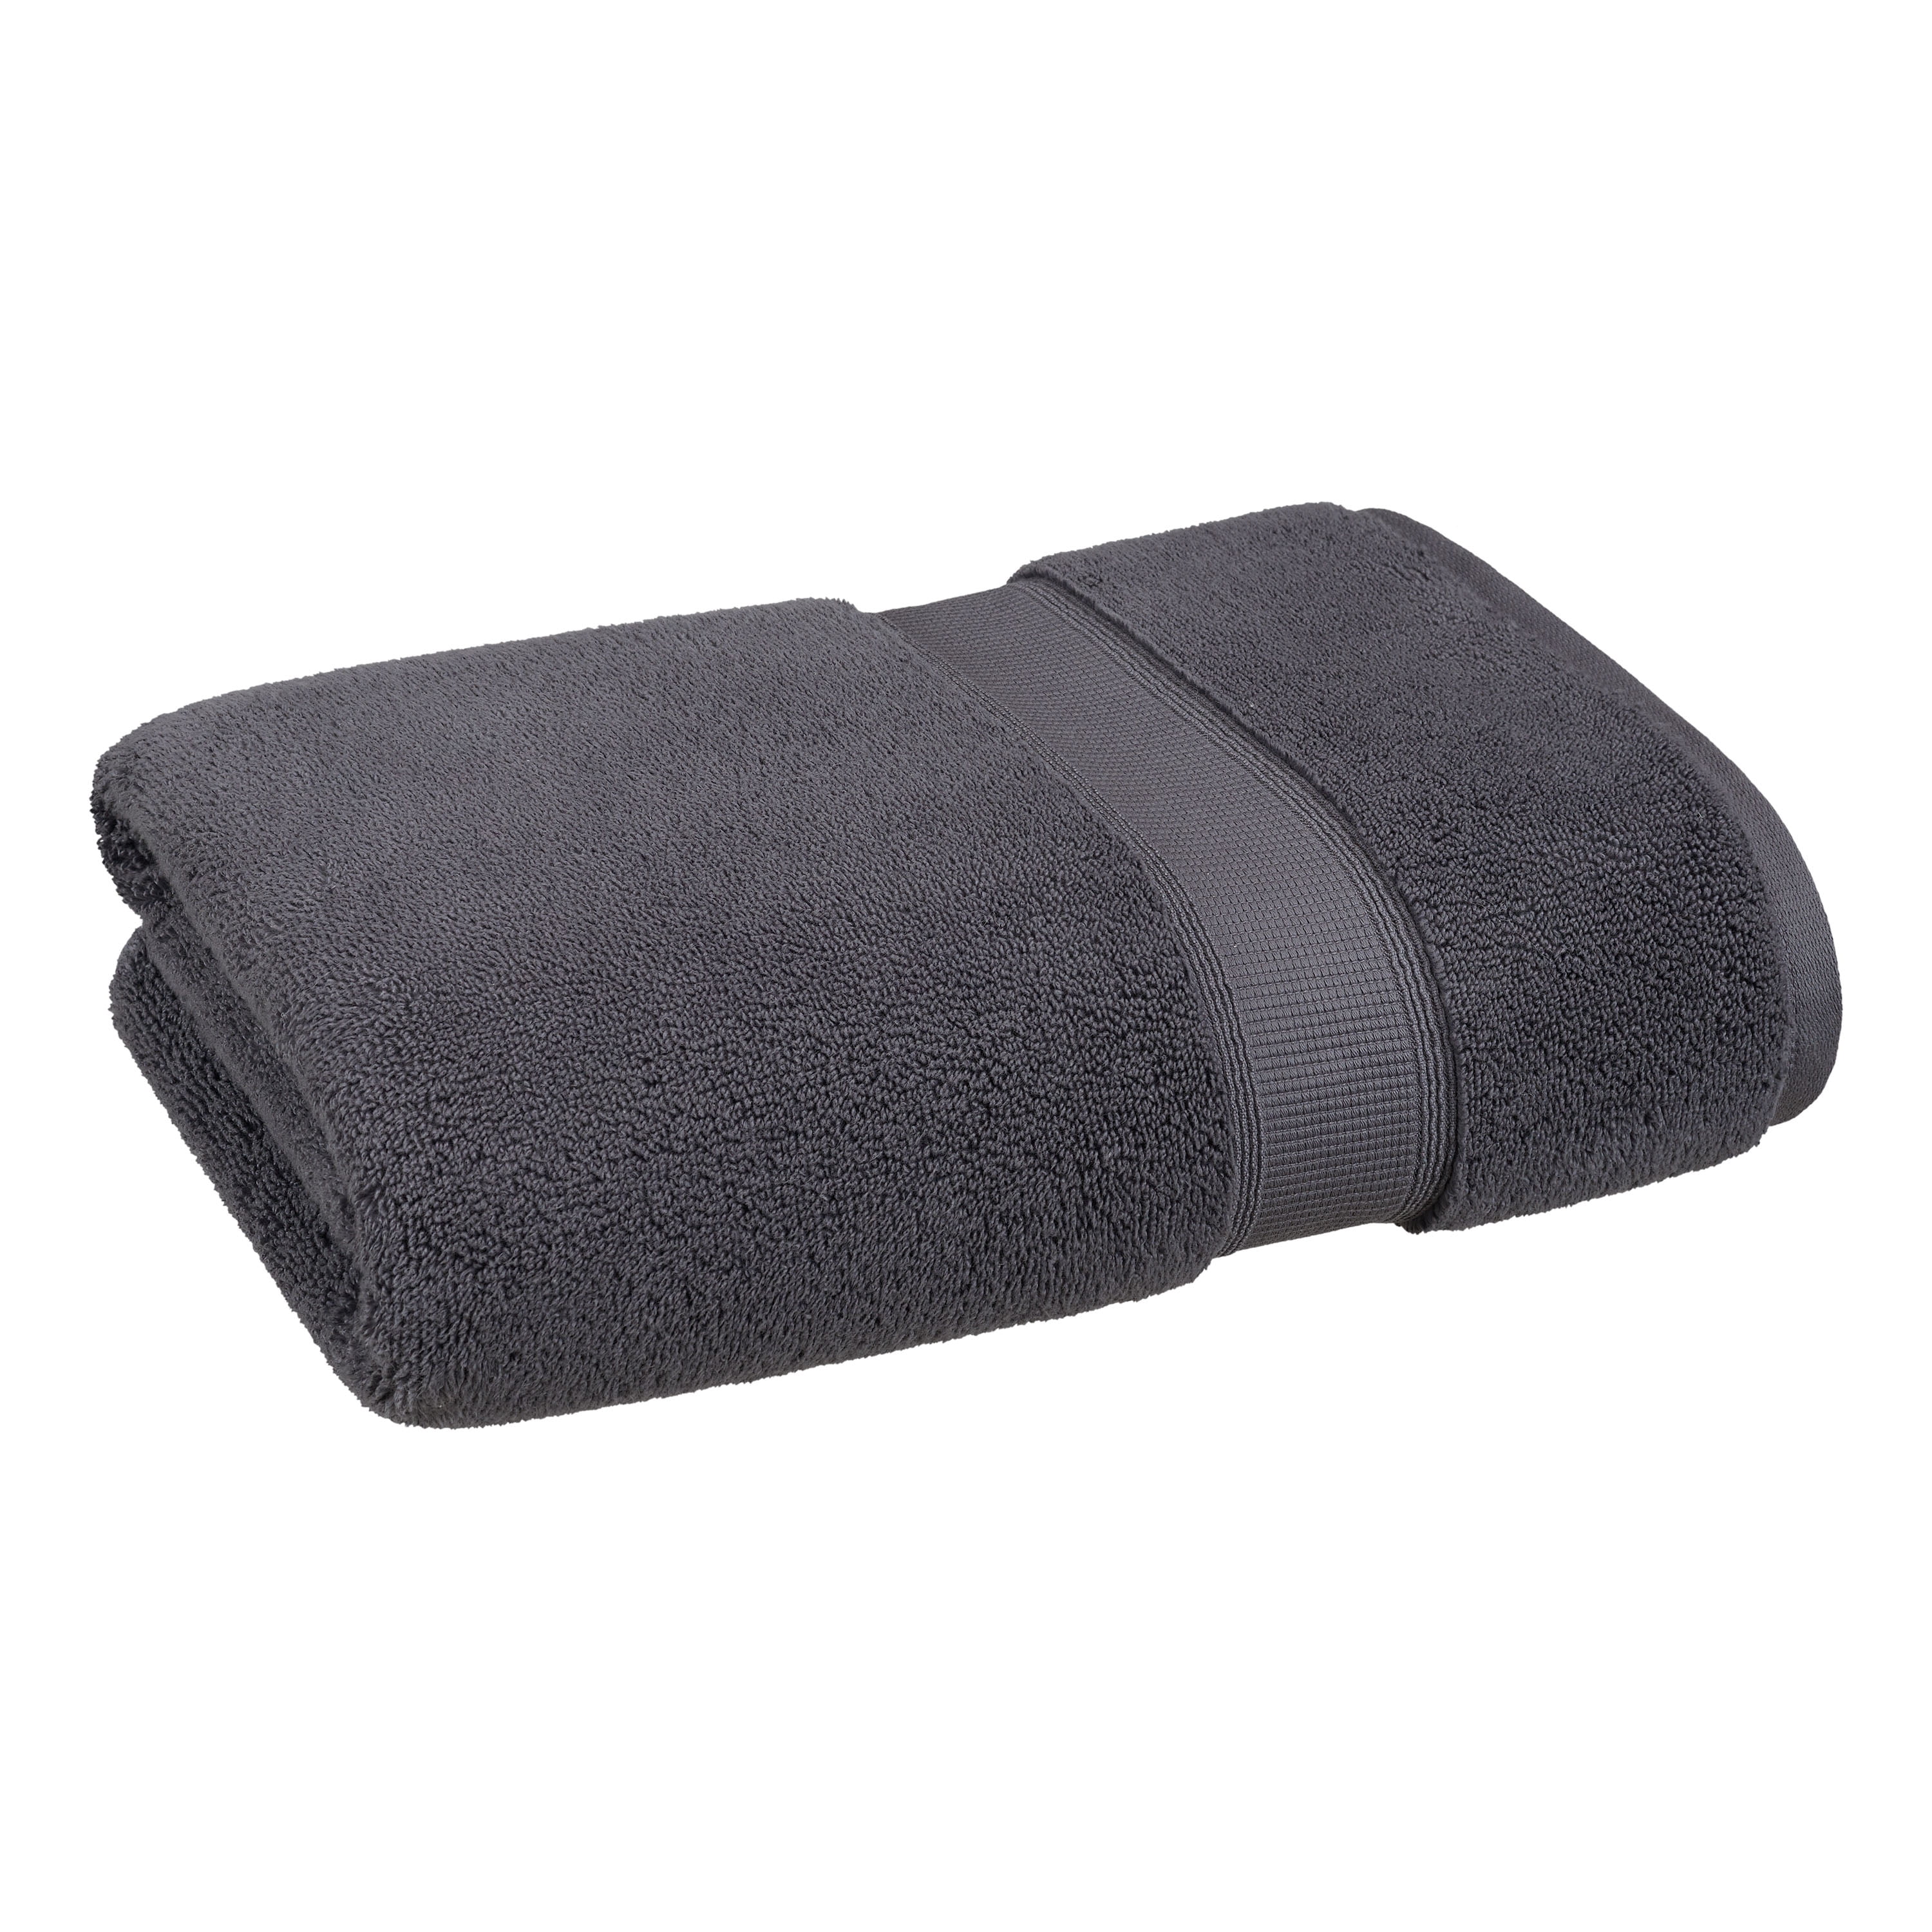 ⚡️Superior eLuxury 900GSM Egyptian Cotton 2pc Bath Towel Set - Charcoal  (30x55)